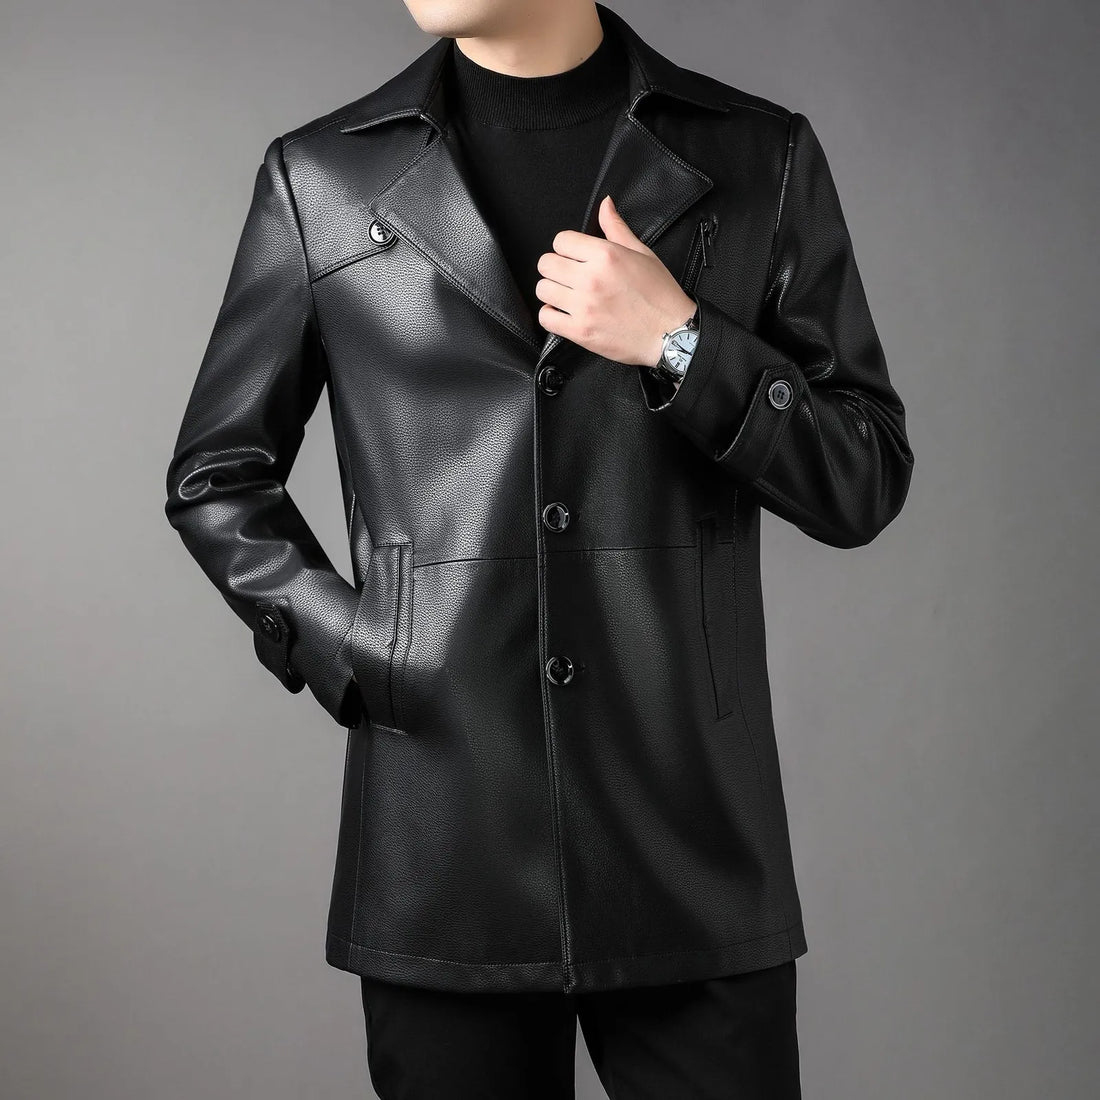 Men's Mid-Length Windbreaker Black Leather Coat